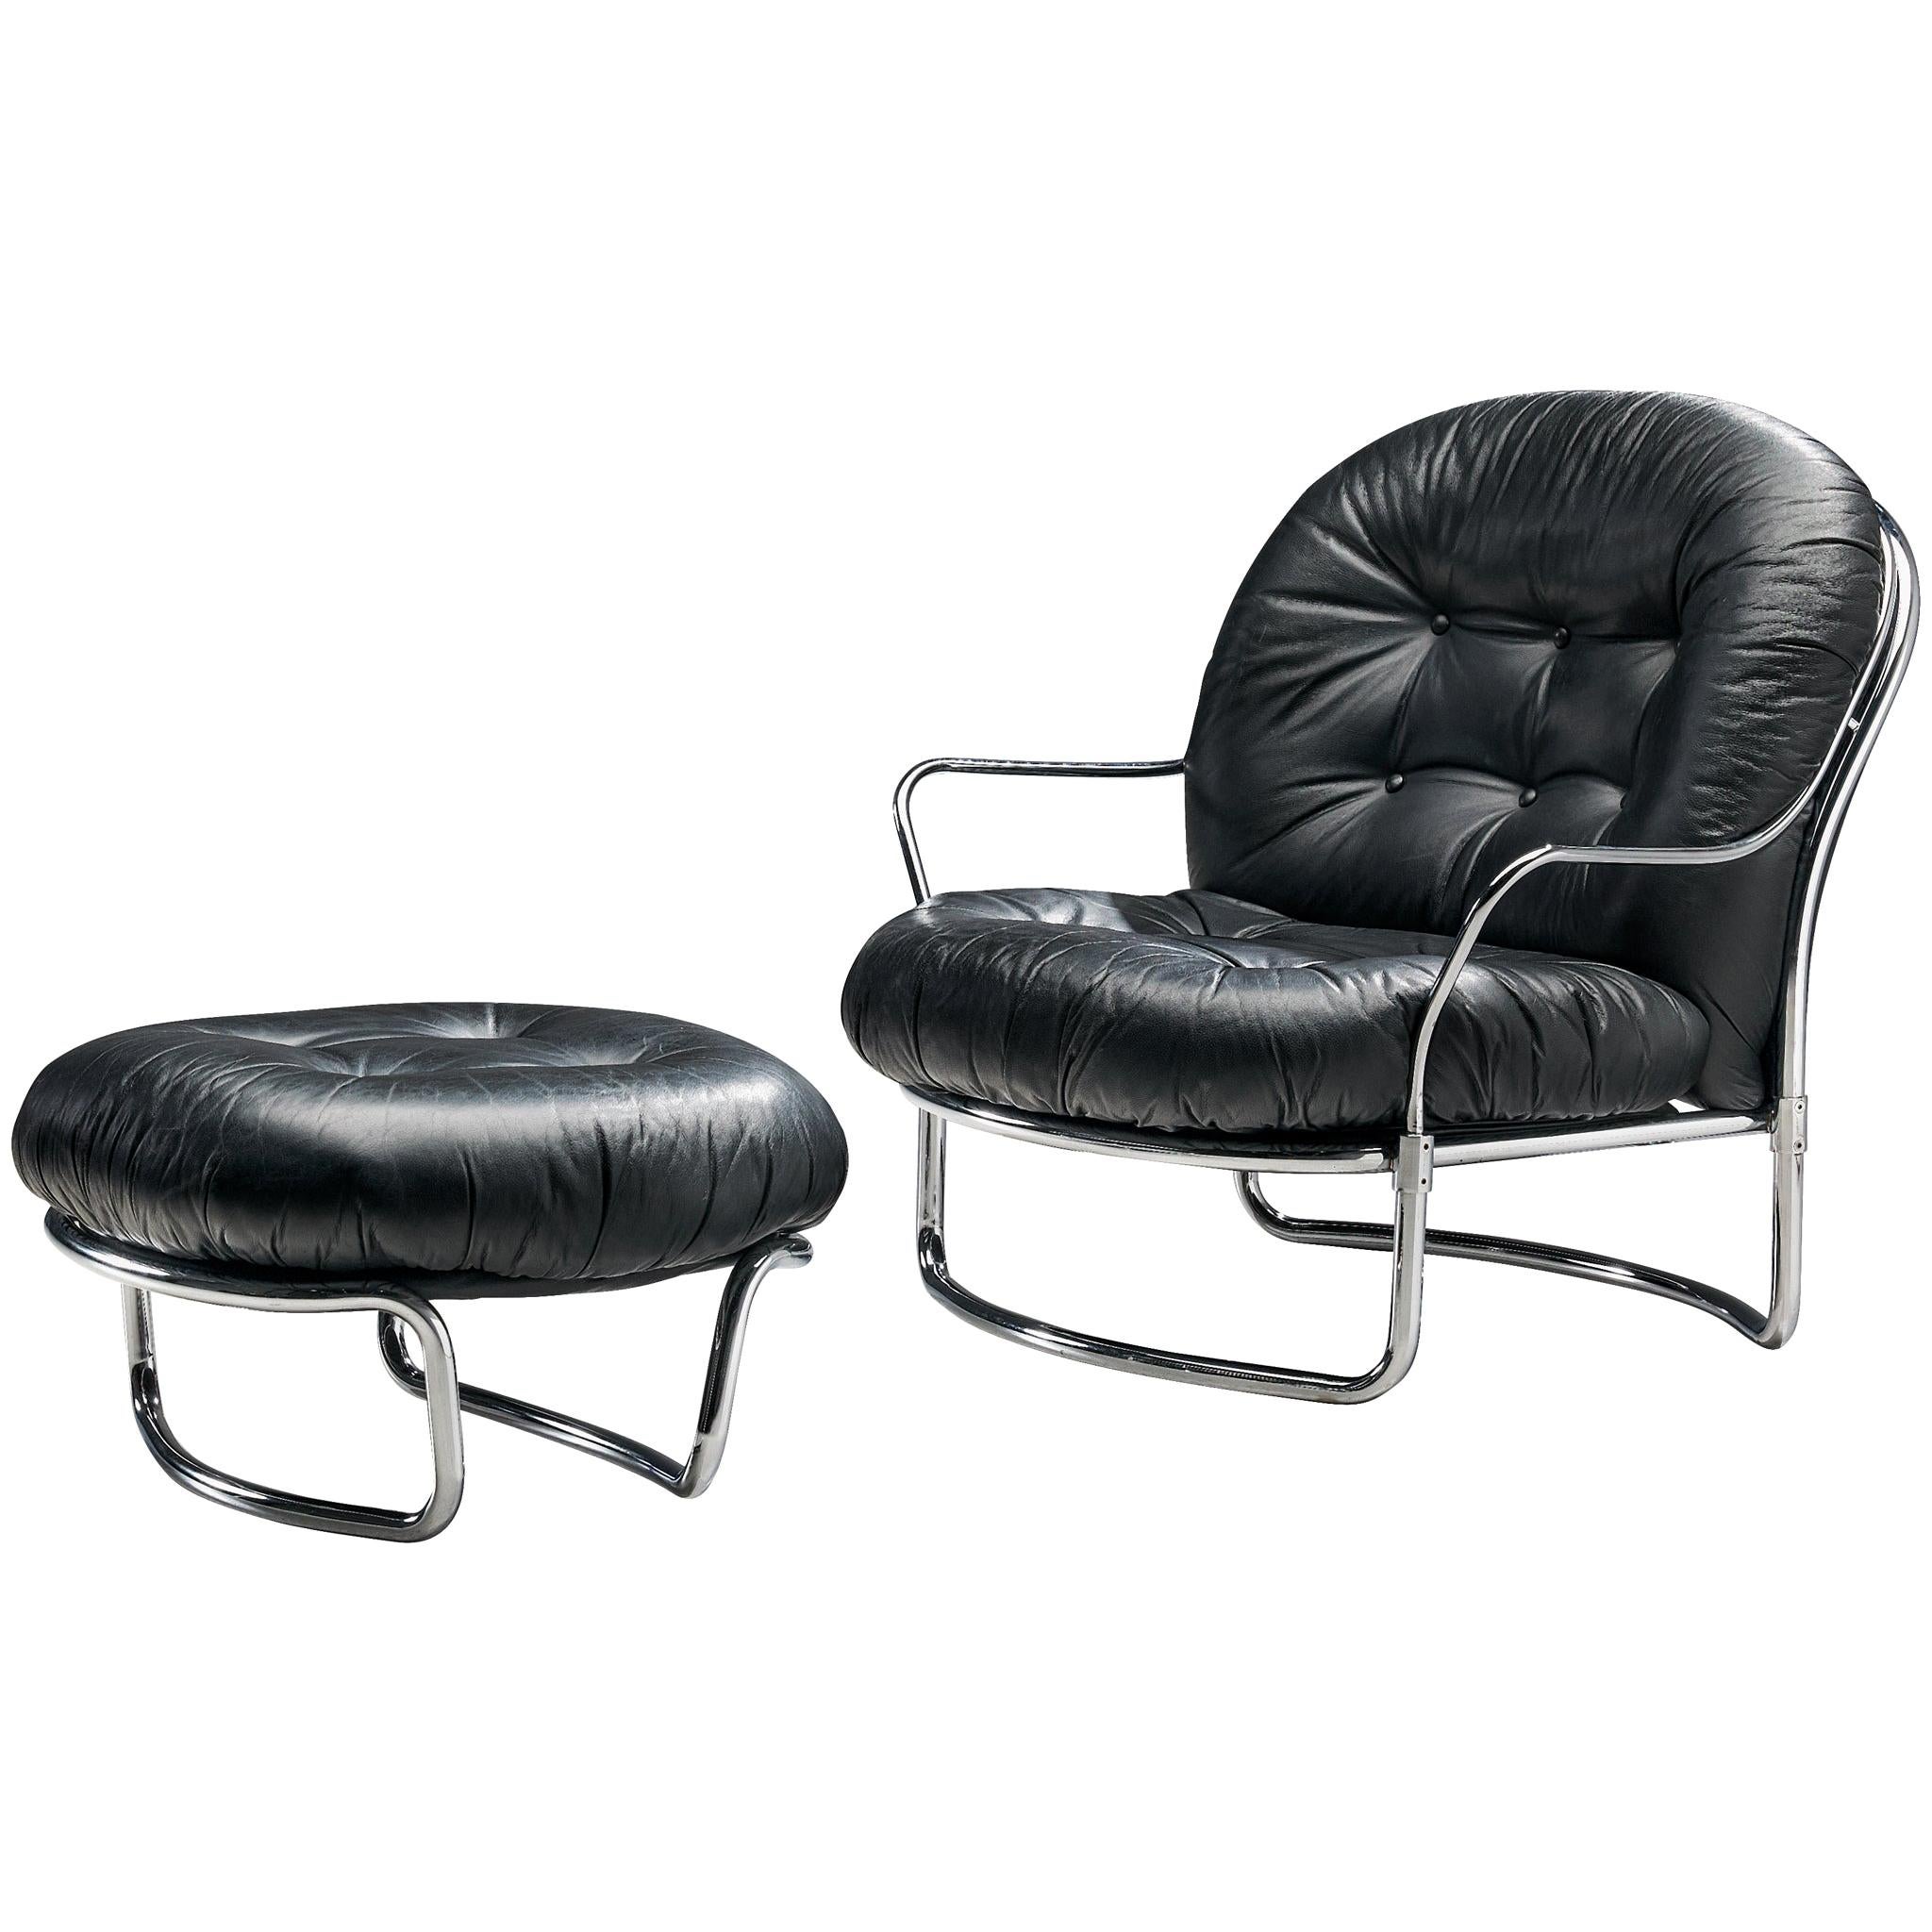 Carlo de Carli Tubular Lounge Chair with Ottoman in Black Leather